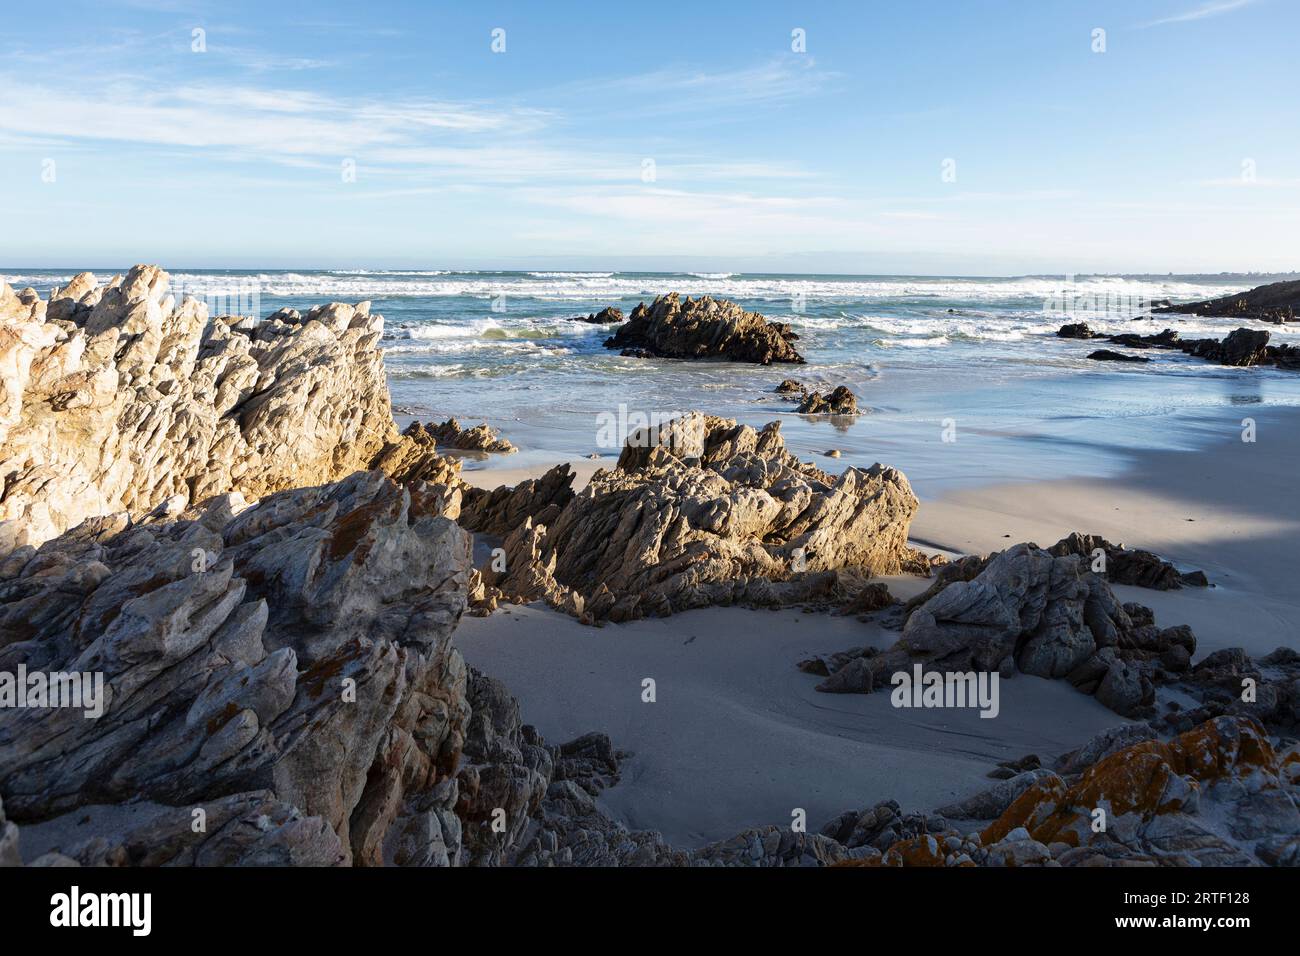 South Africa, Hermanus, Rocky coastline with Atlantic Ocean in Voelklip Beach on sunny day Stock Photo